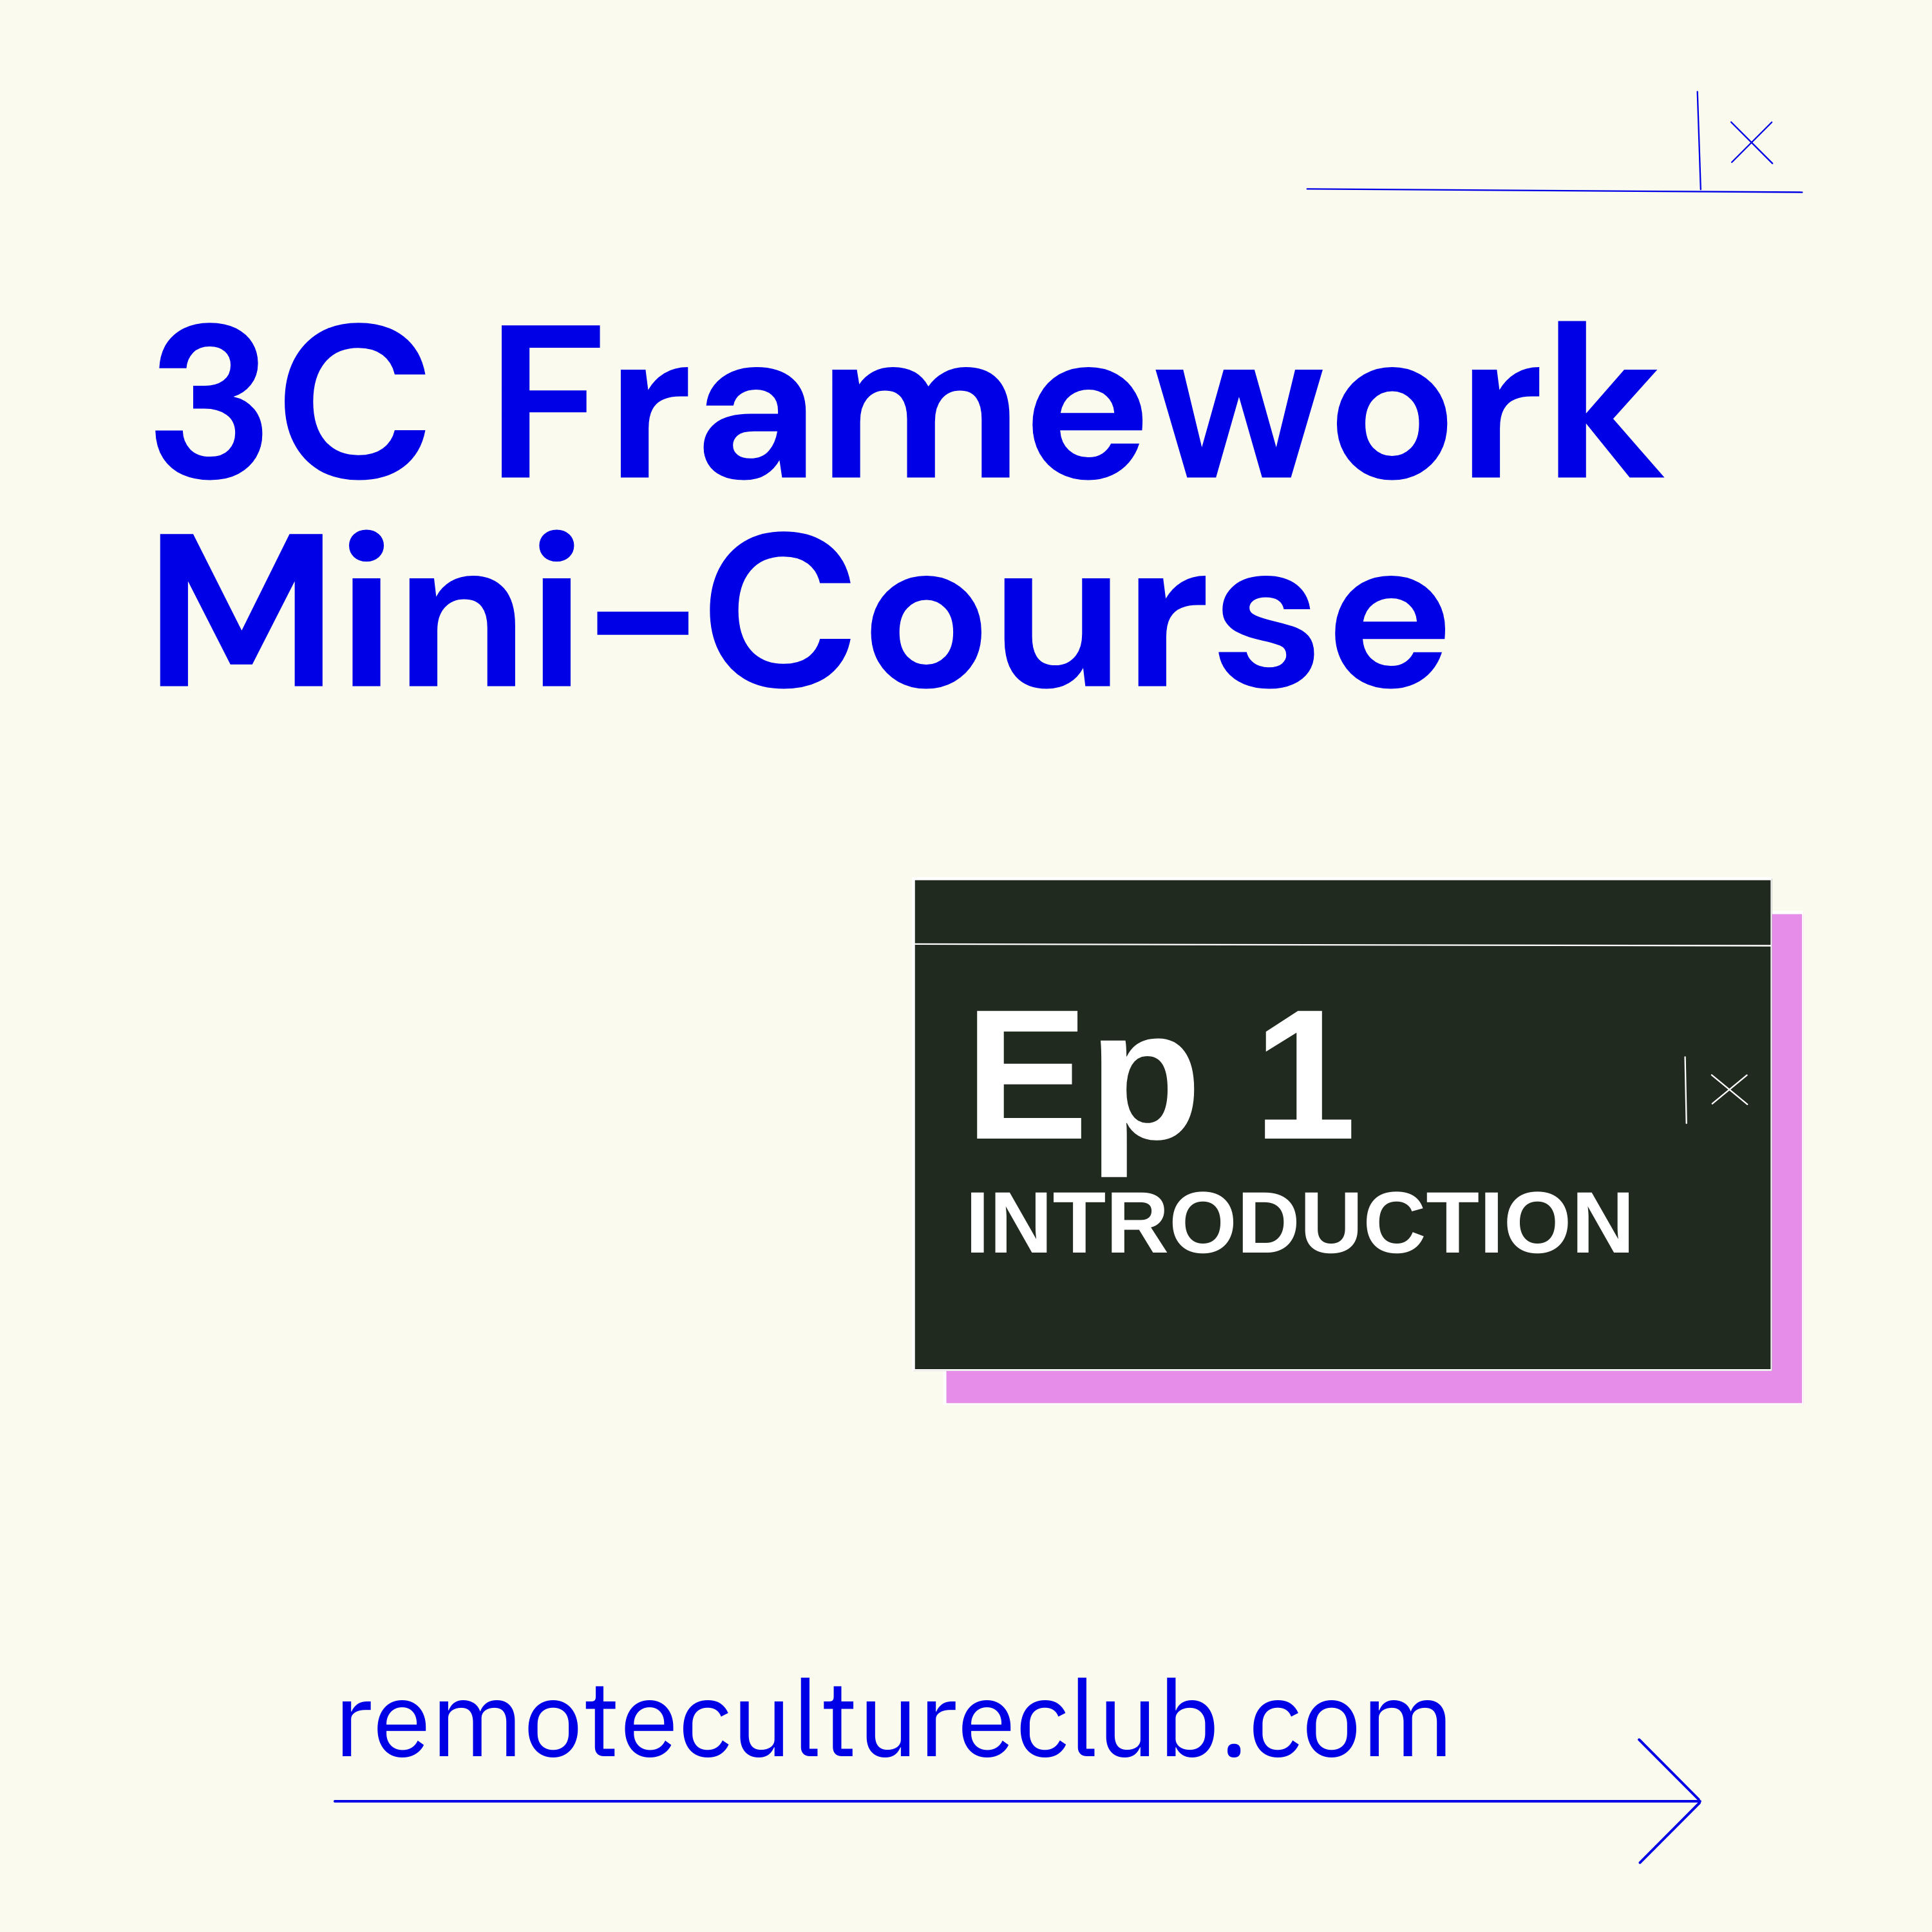 3C Framework Mini-Course: Introduction